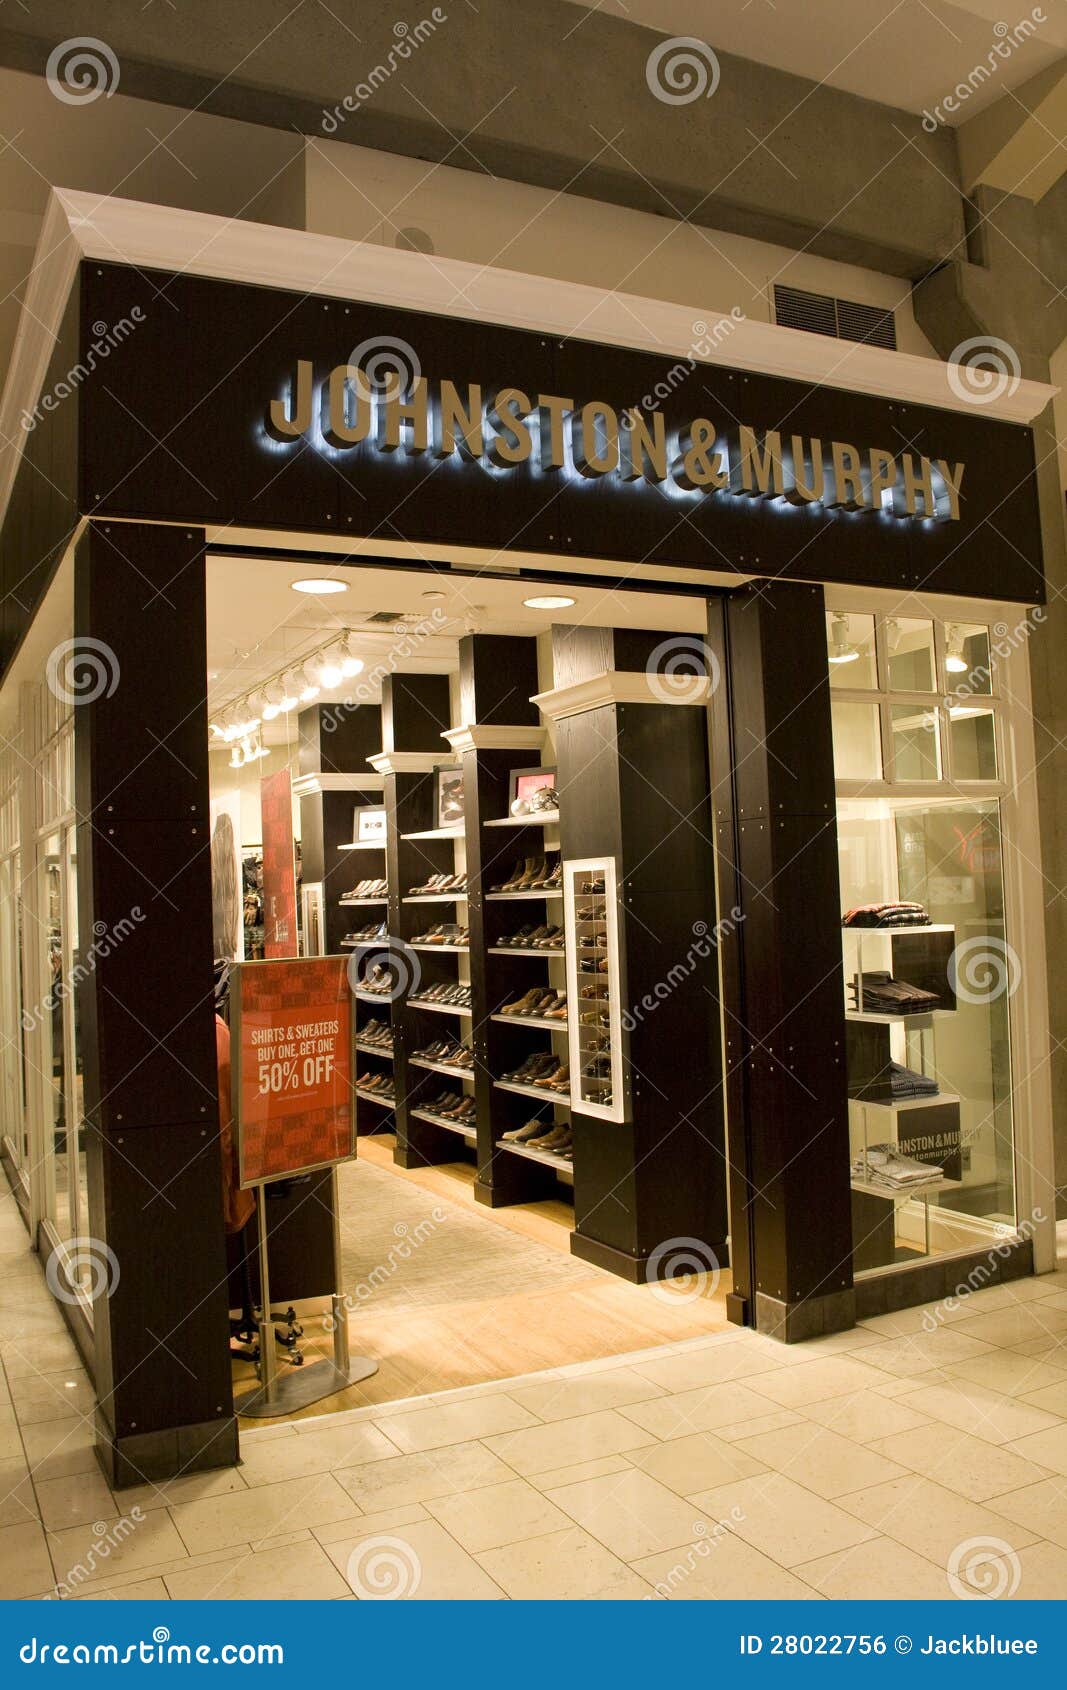 Johnston  Murphy store in Bellevue Square, Bellevue, Washington, USA ...